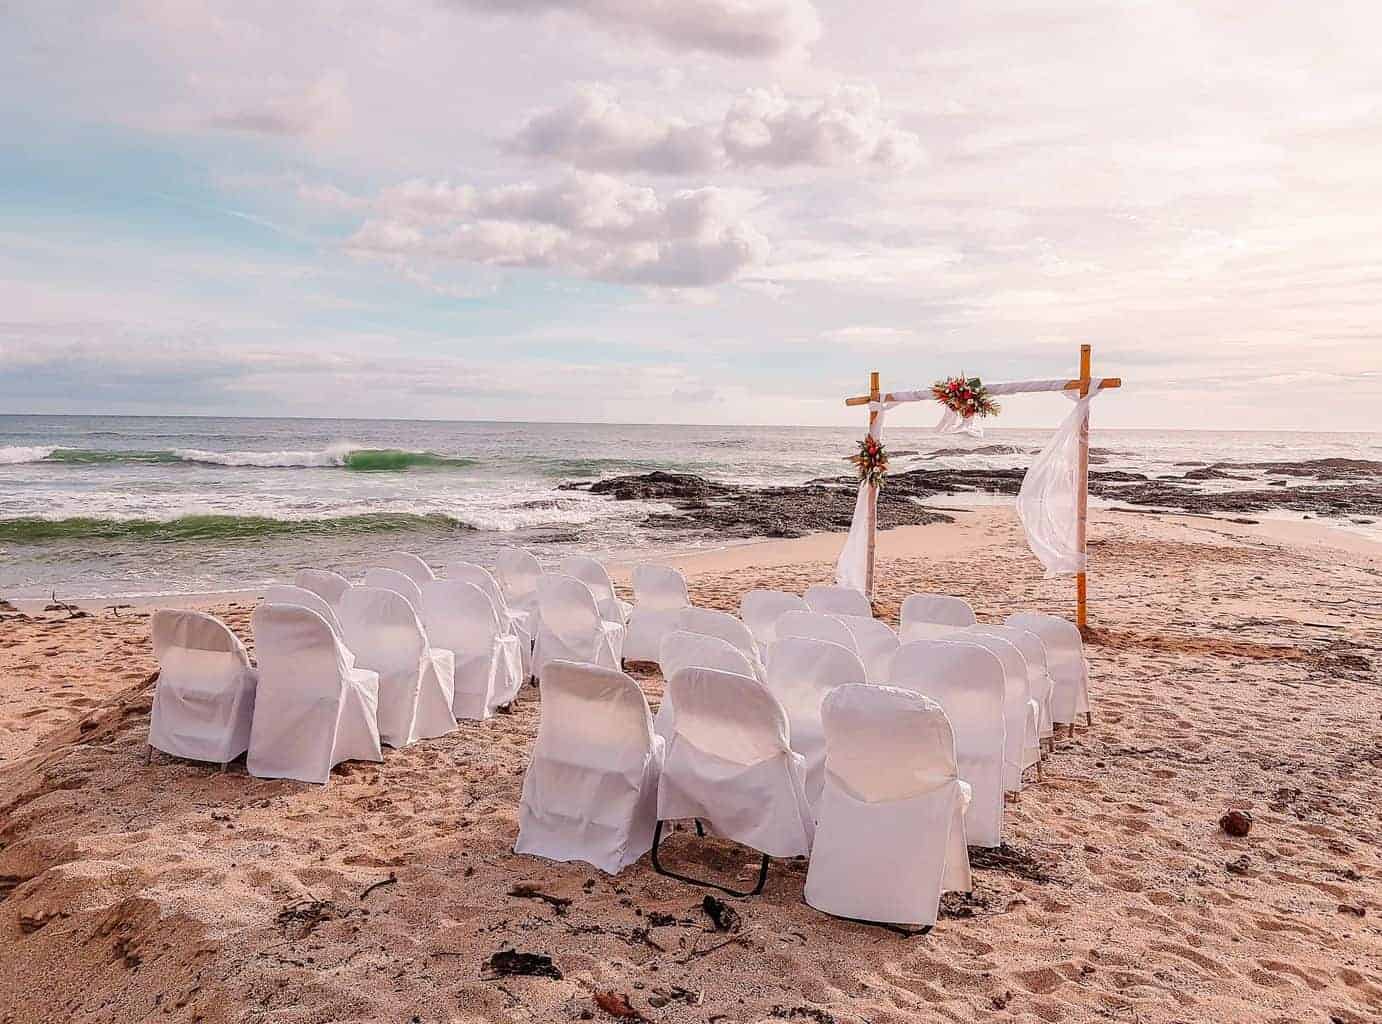 costa rica destination wedding